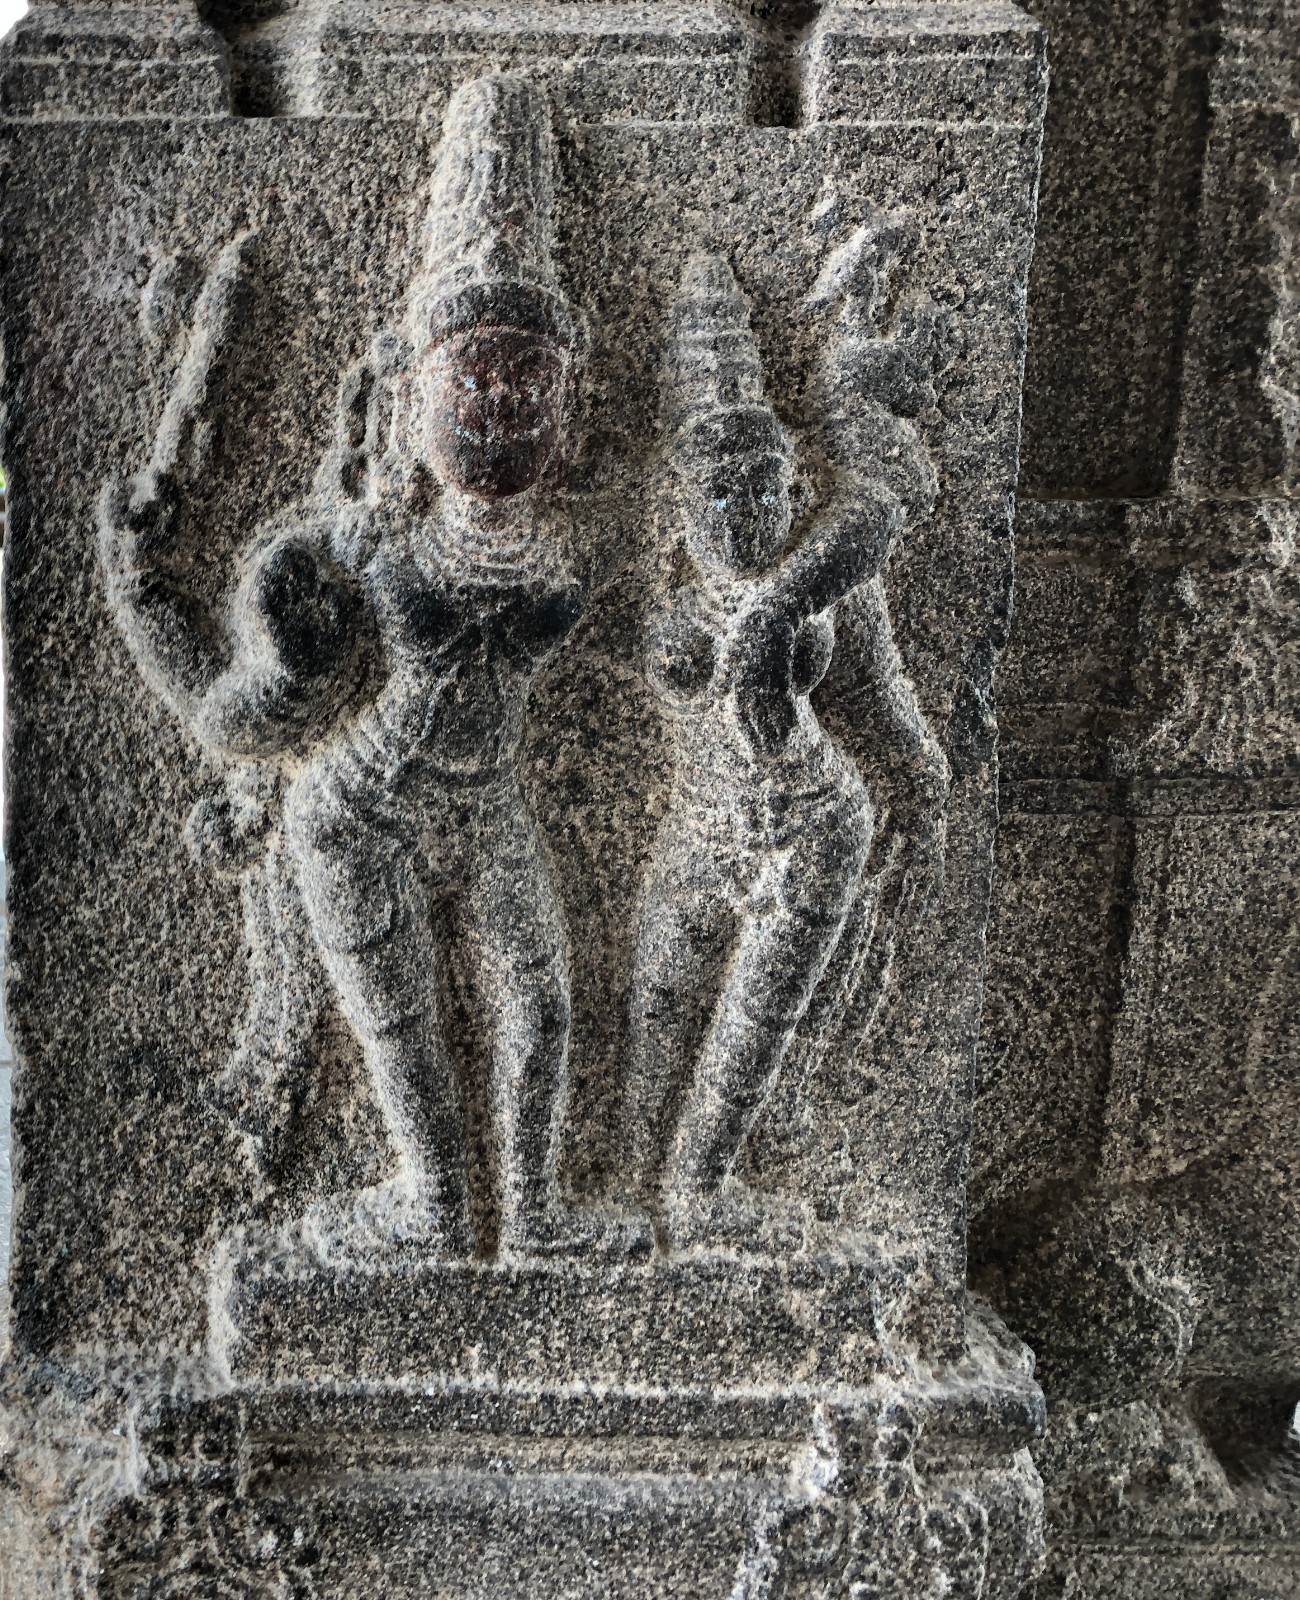 kanchi kamakshi amman temple pillar